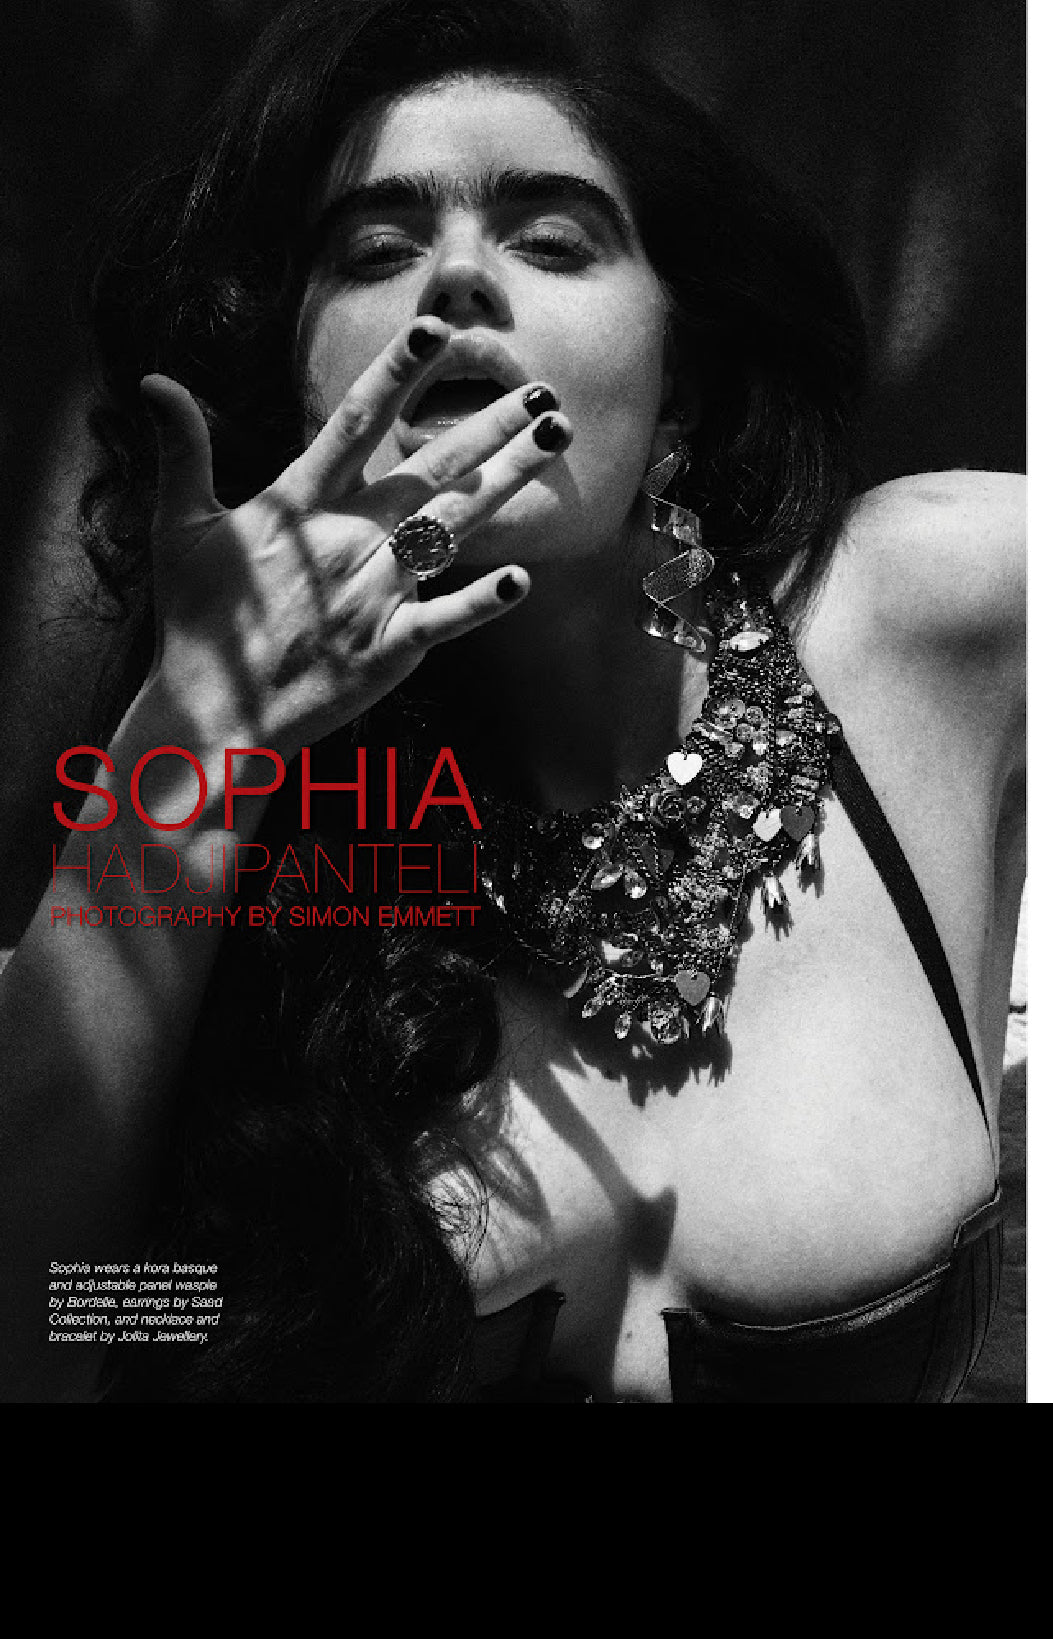 Sophia Hadjipanteli in Jolita Jewellery's Crystal and Chain necklace for The Untitle Magazine, Rebel Issue